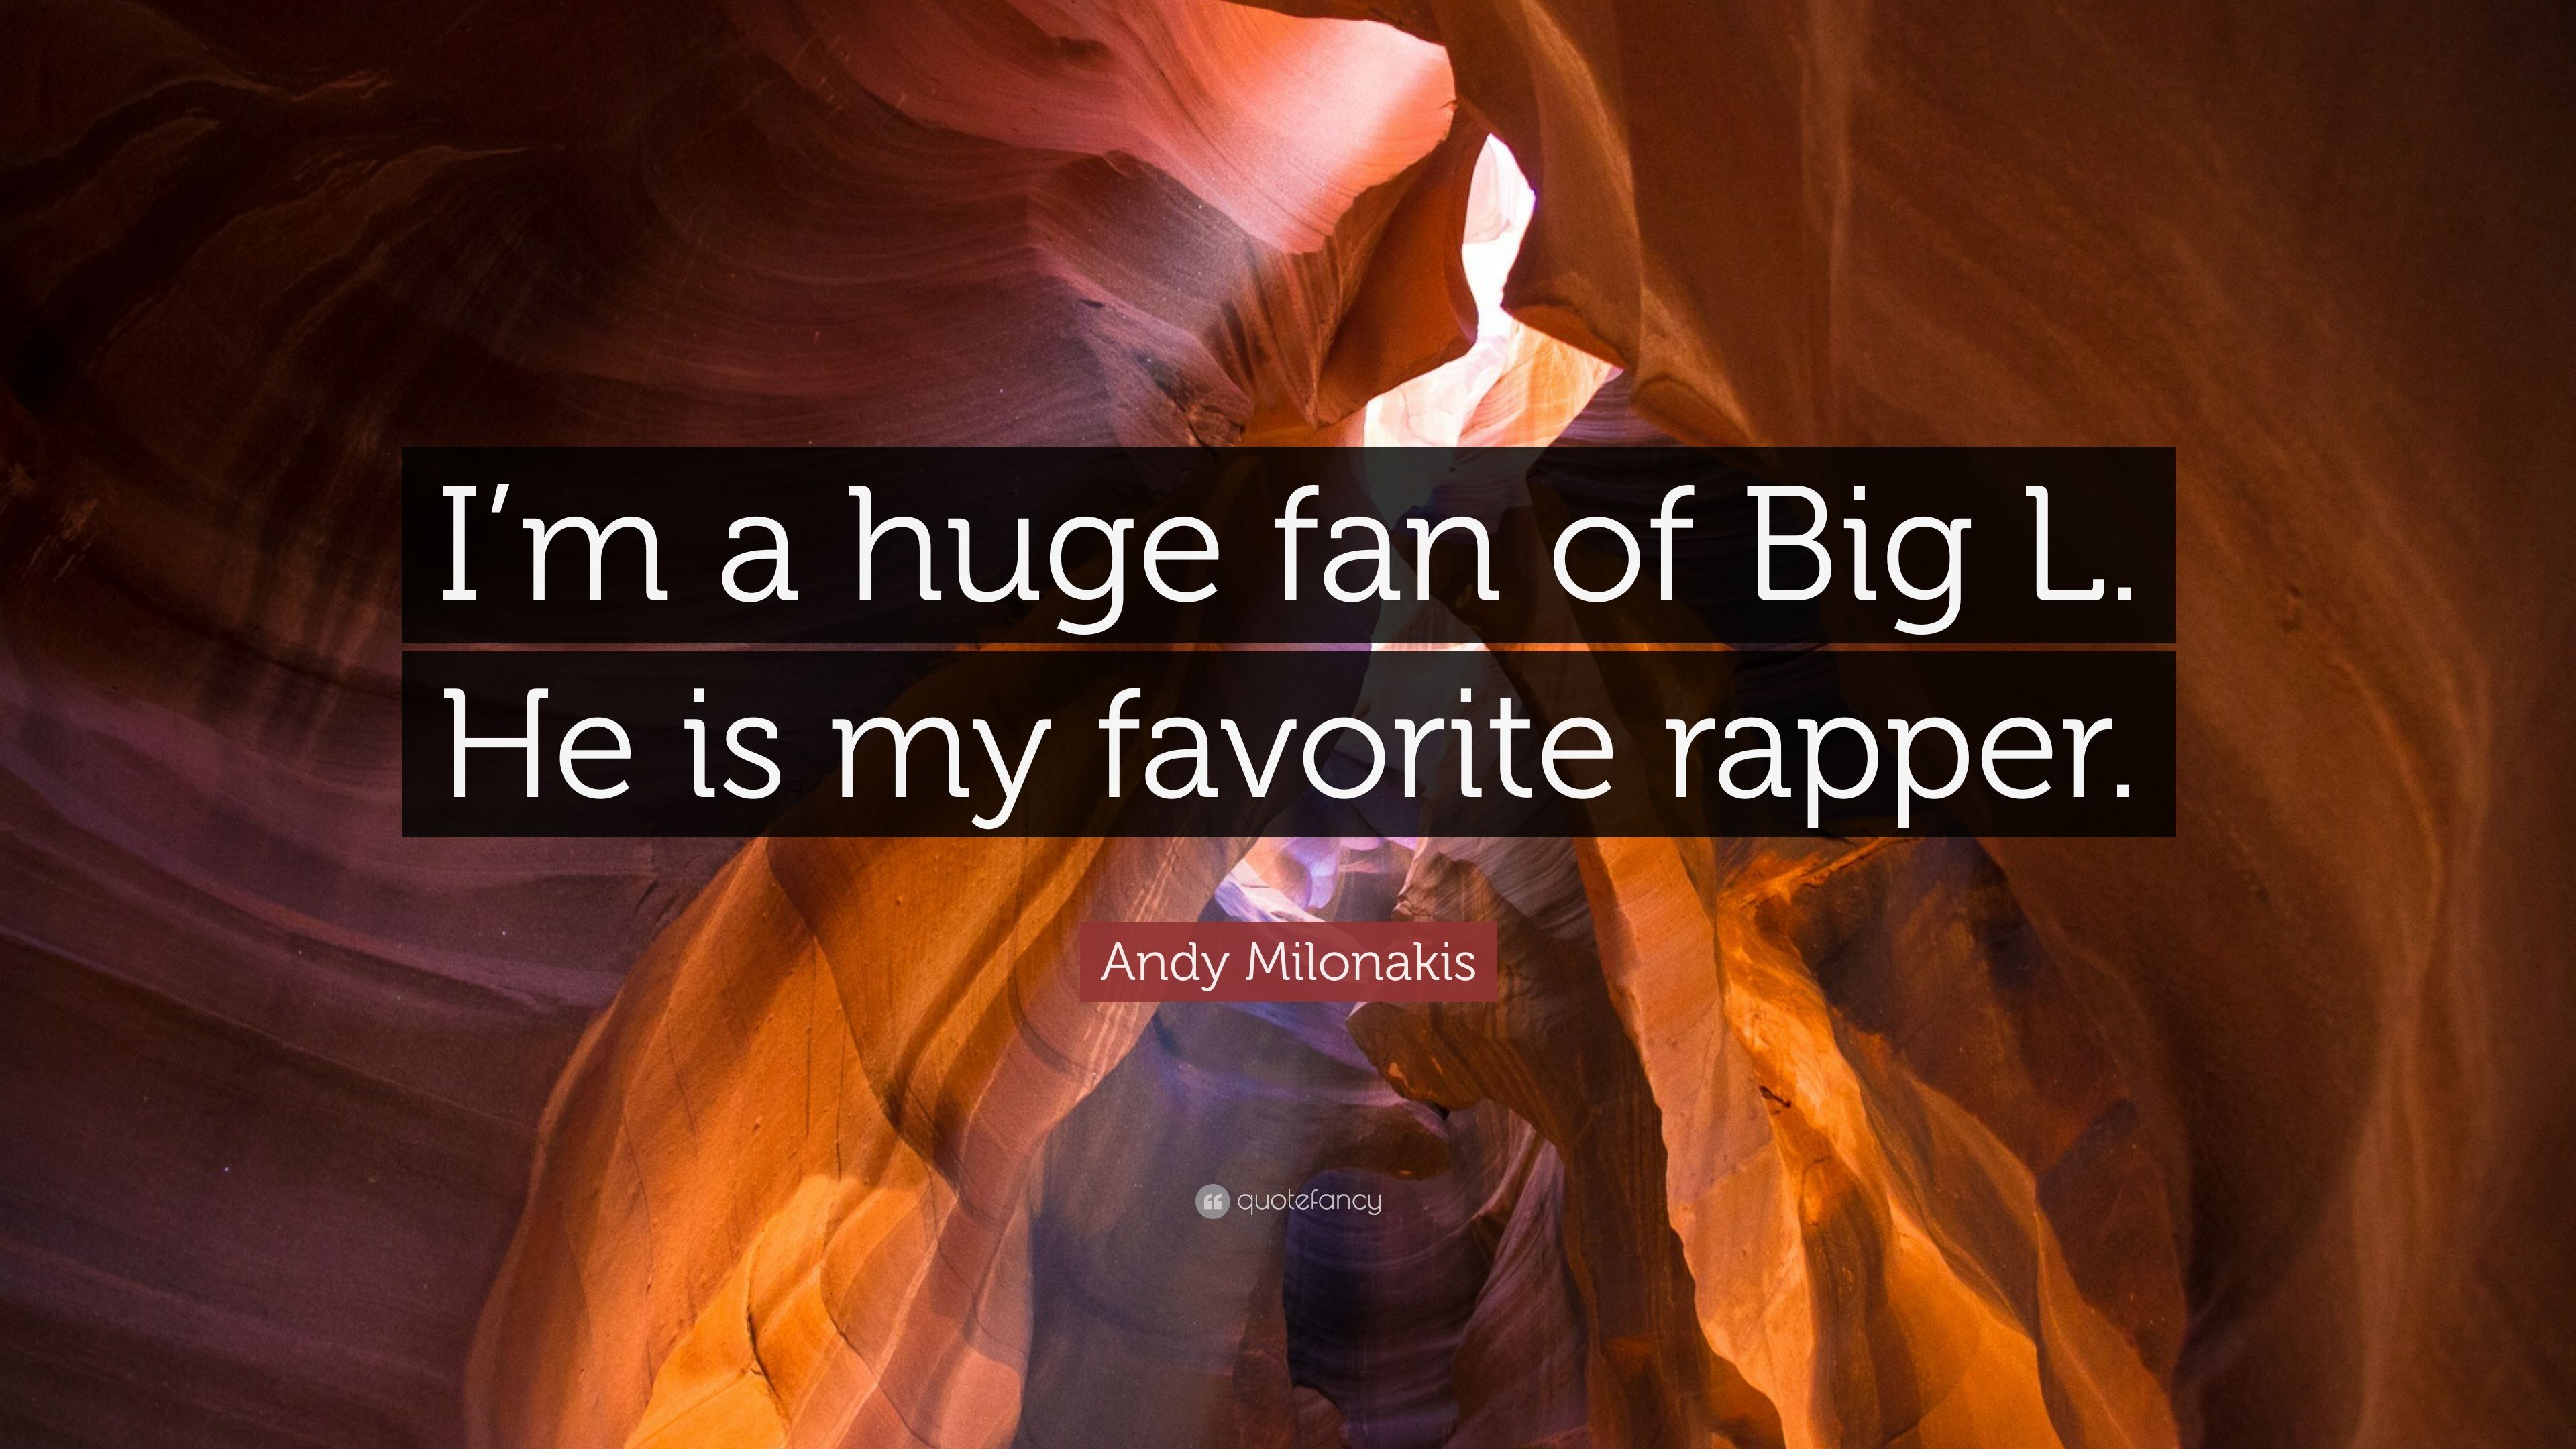 Andy Milonakis Quote: “I'm a huge fan of Big L. He is my favorite rapper.” (7 wallpaper)